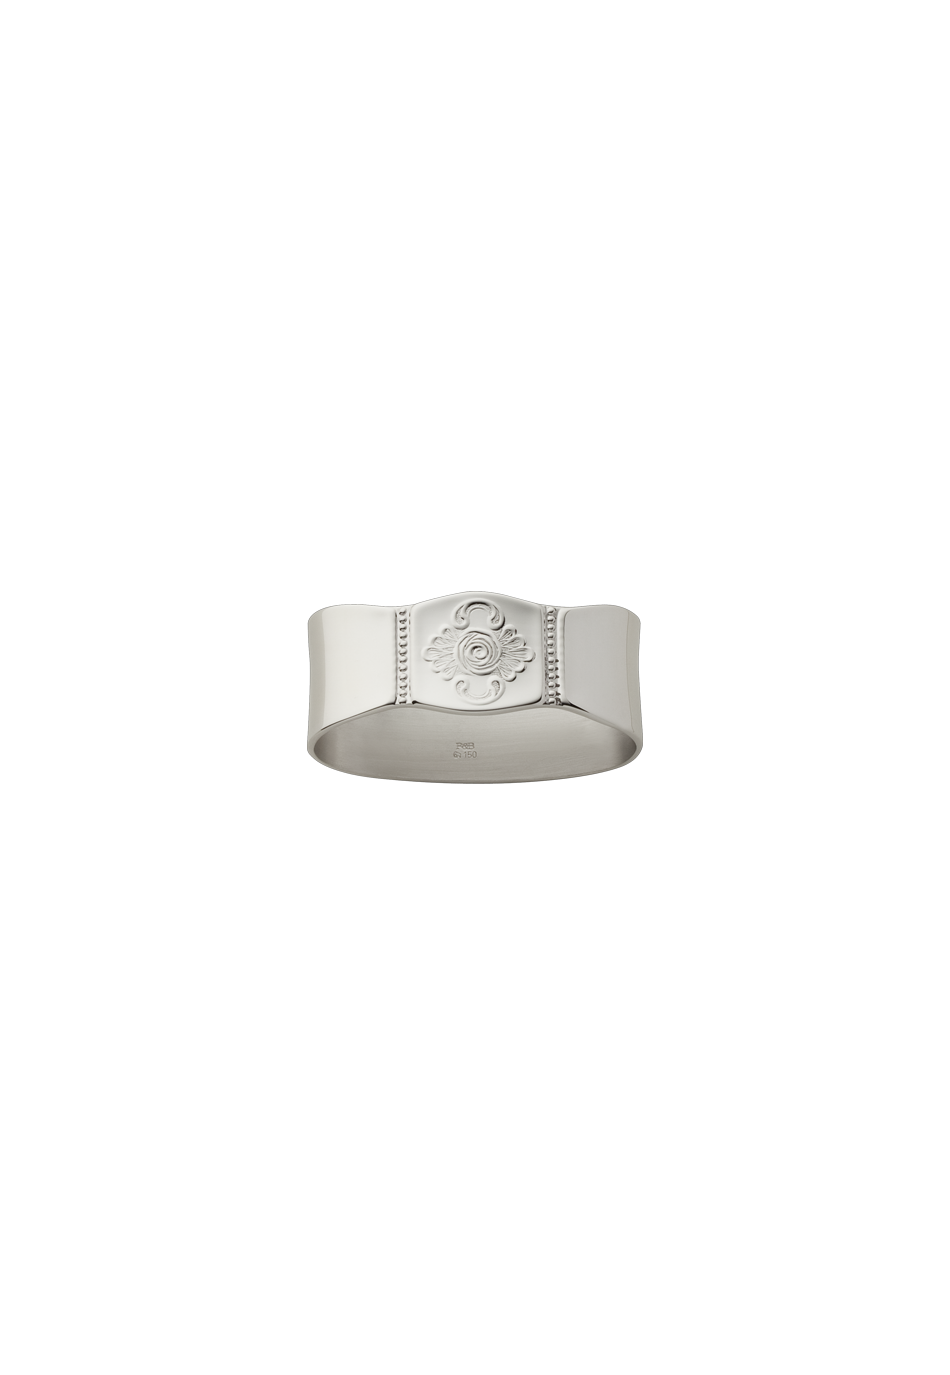 Rosenmuster Table Napkin Ring (150g massive silverplated)